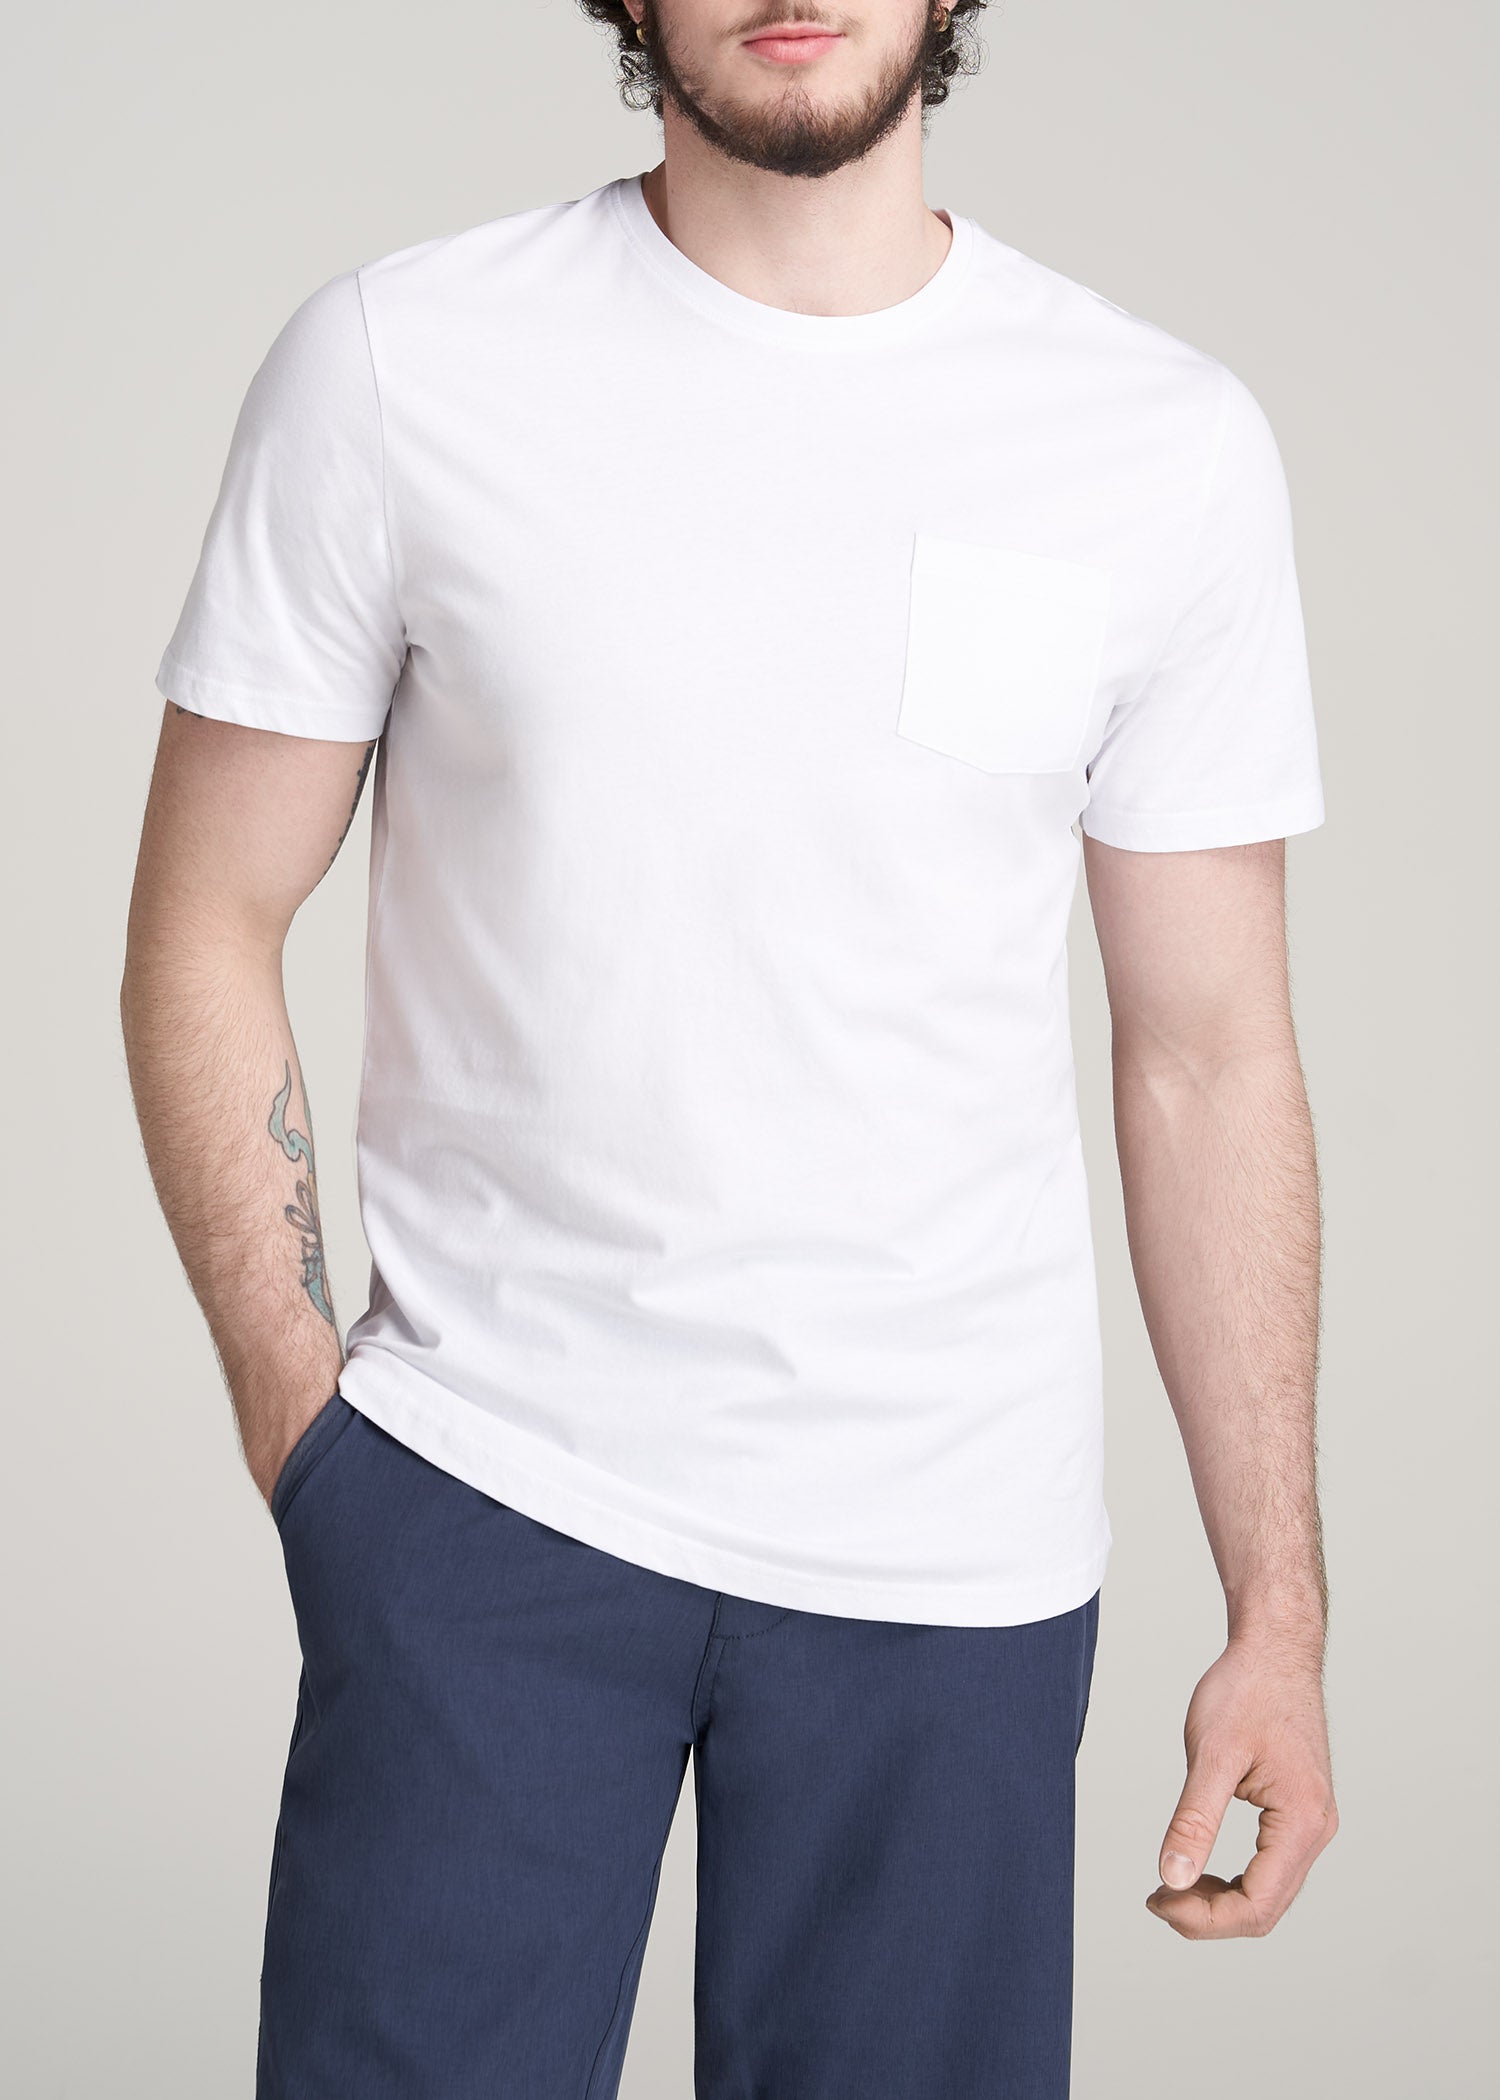 Tall Men's Everyday Pocket T-Shirt